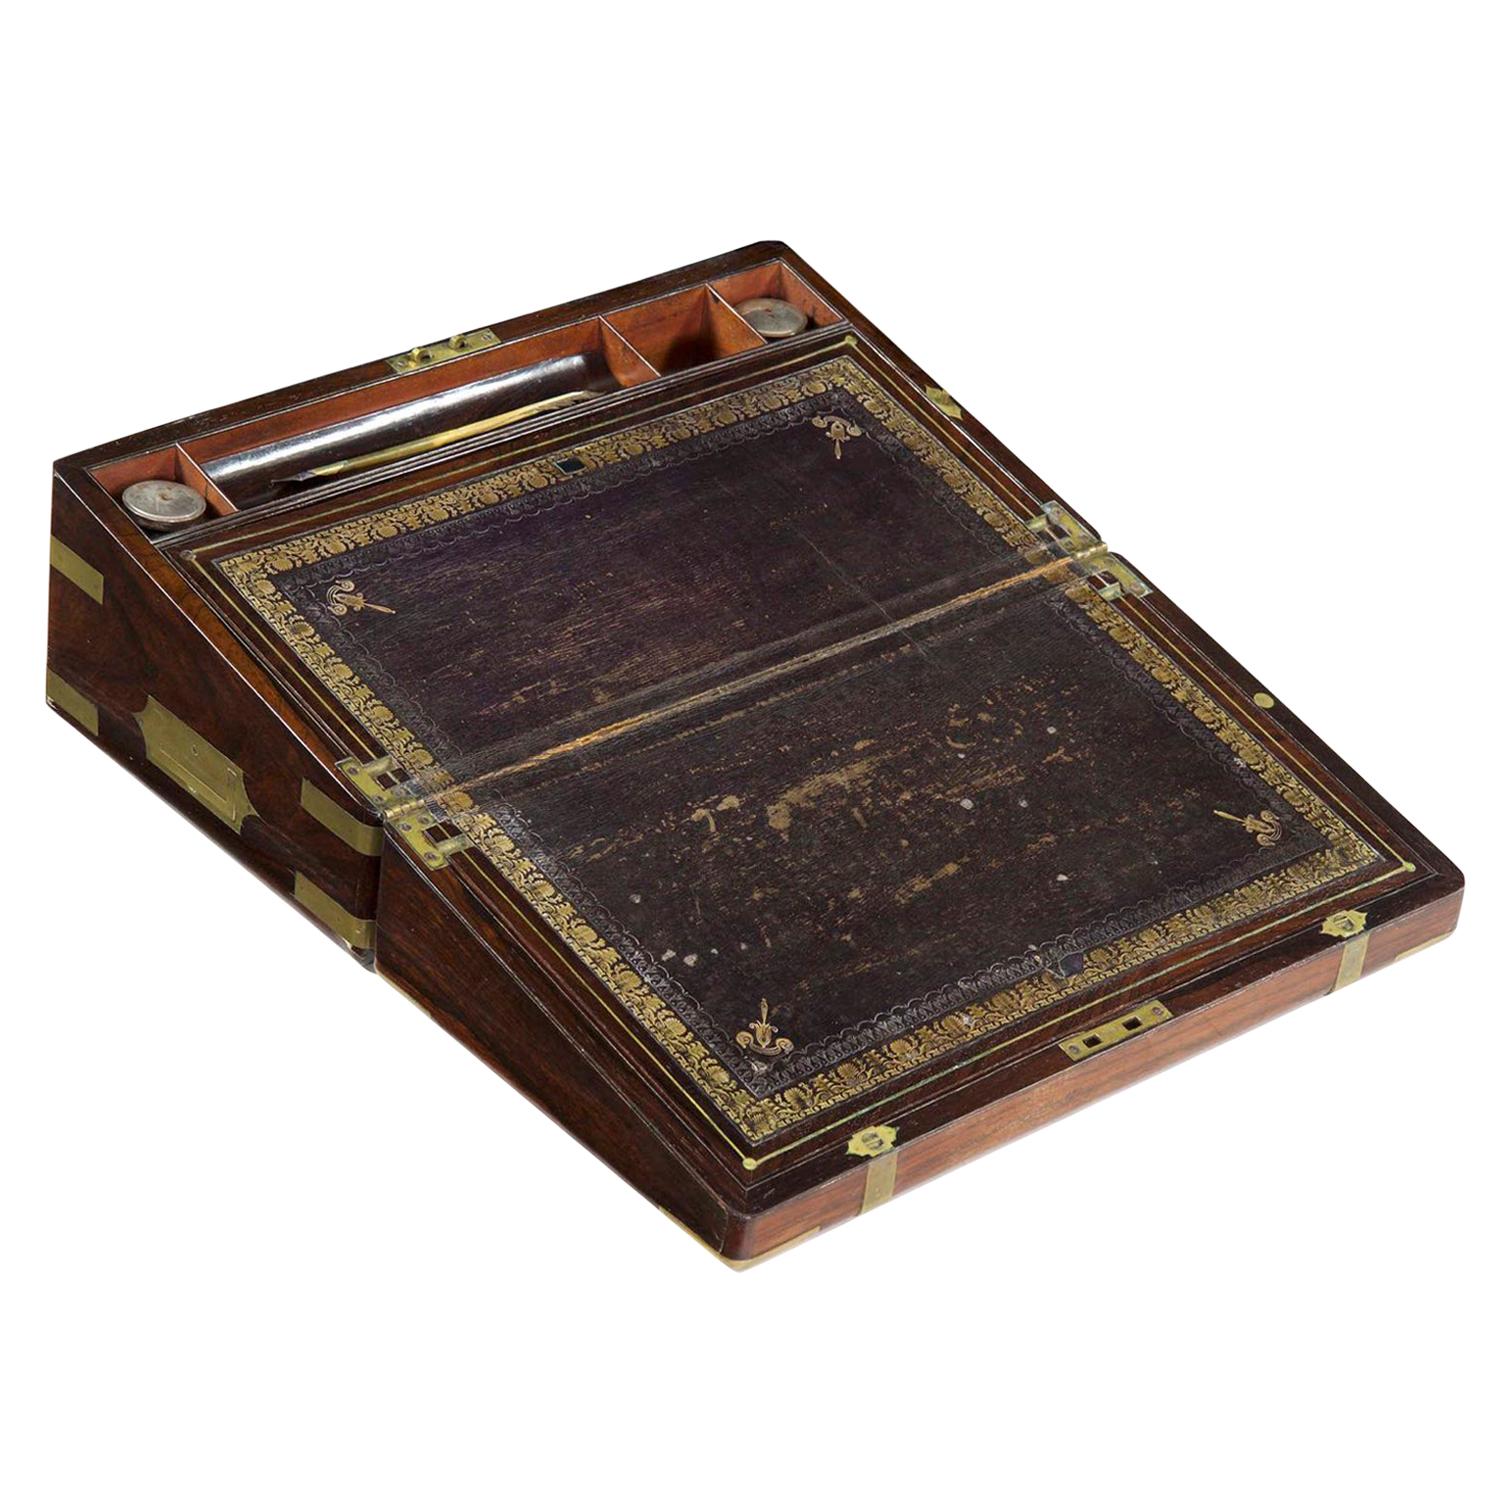 Rare Antique English Regency Rosewood & Brass Writing Slope Box Lap Desk